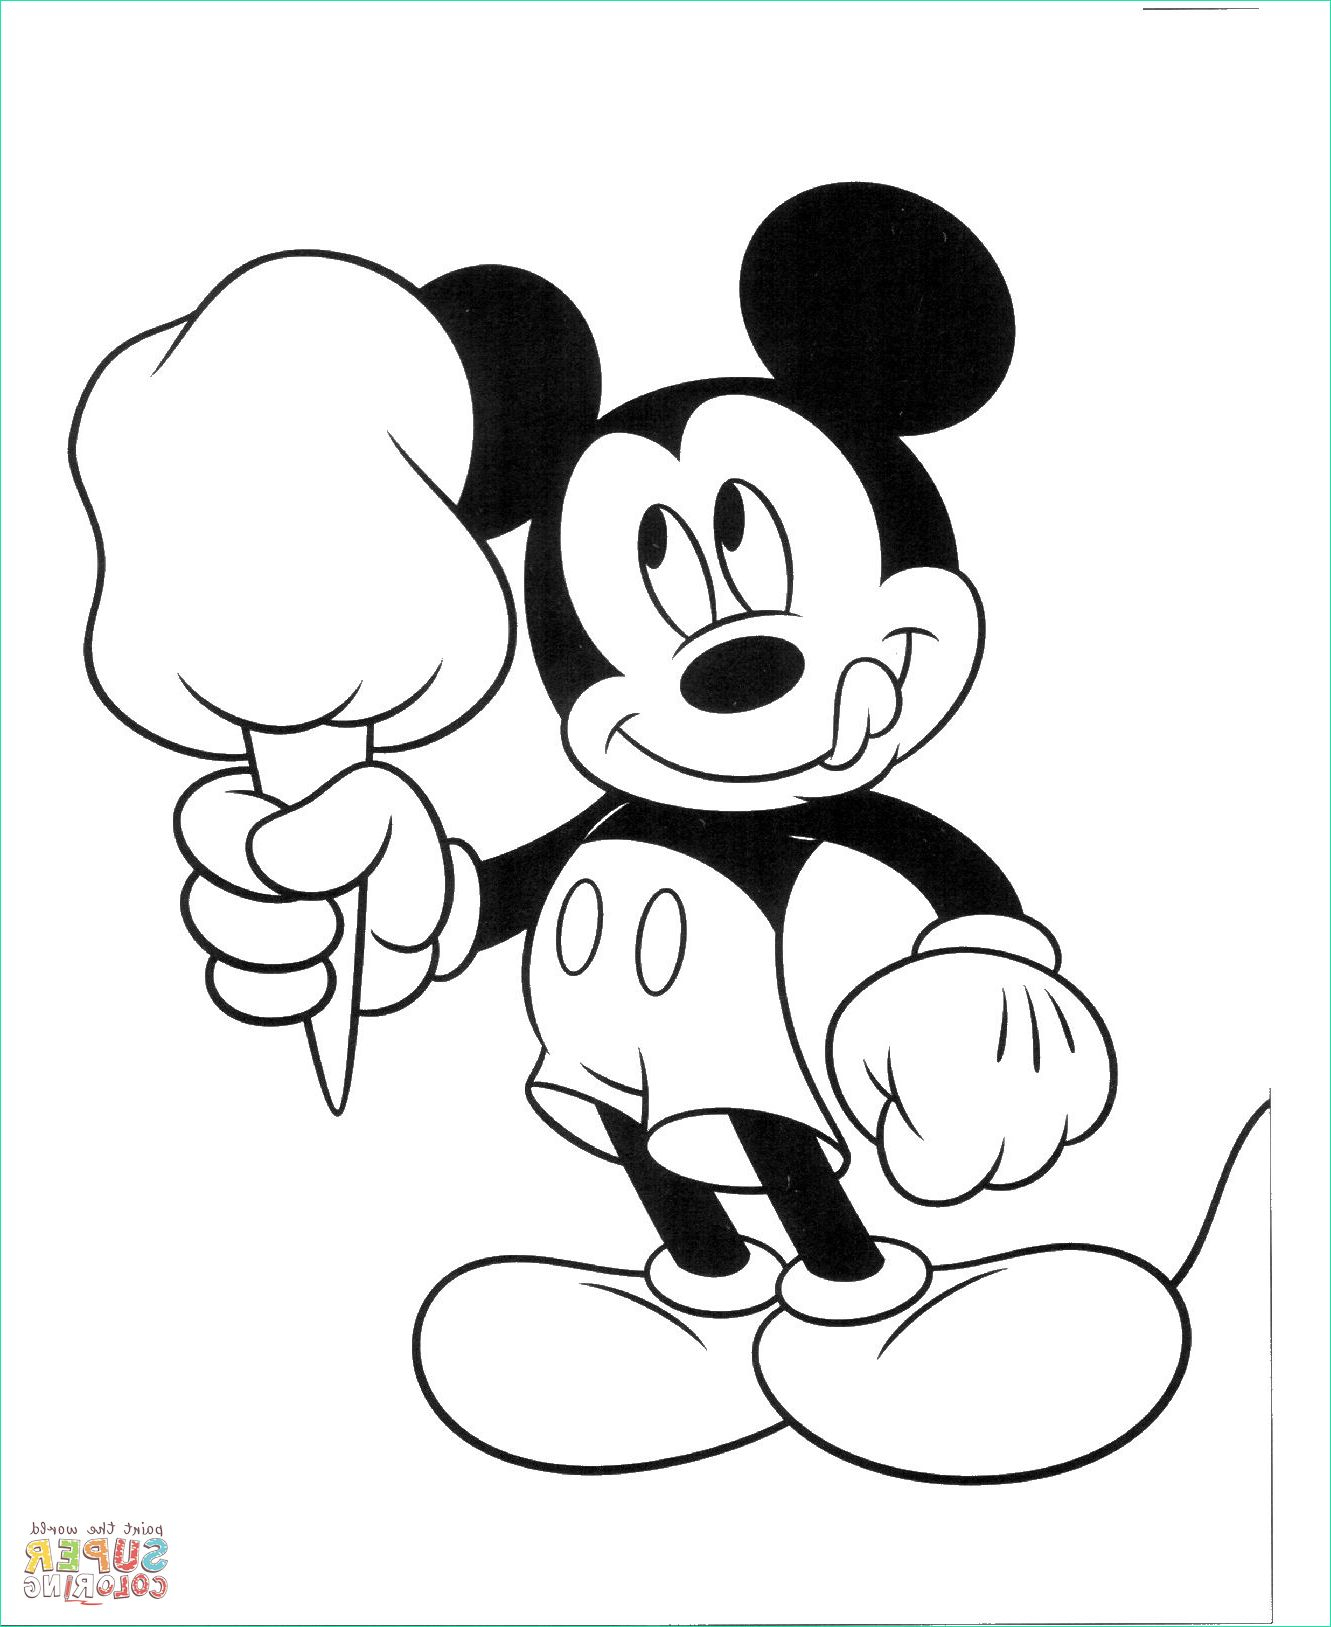 13 Beau De Coloriage À Imprimer Mickey Image - Coloriage : Coloriage dedans Dessin A Imprimer Mickey